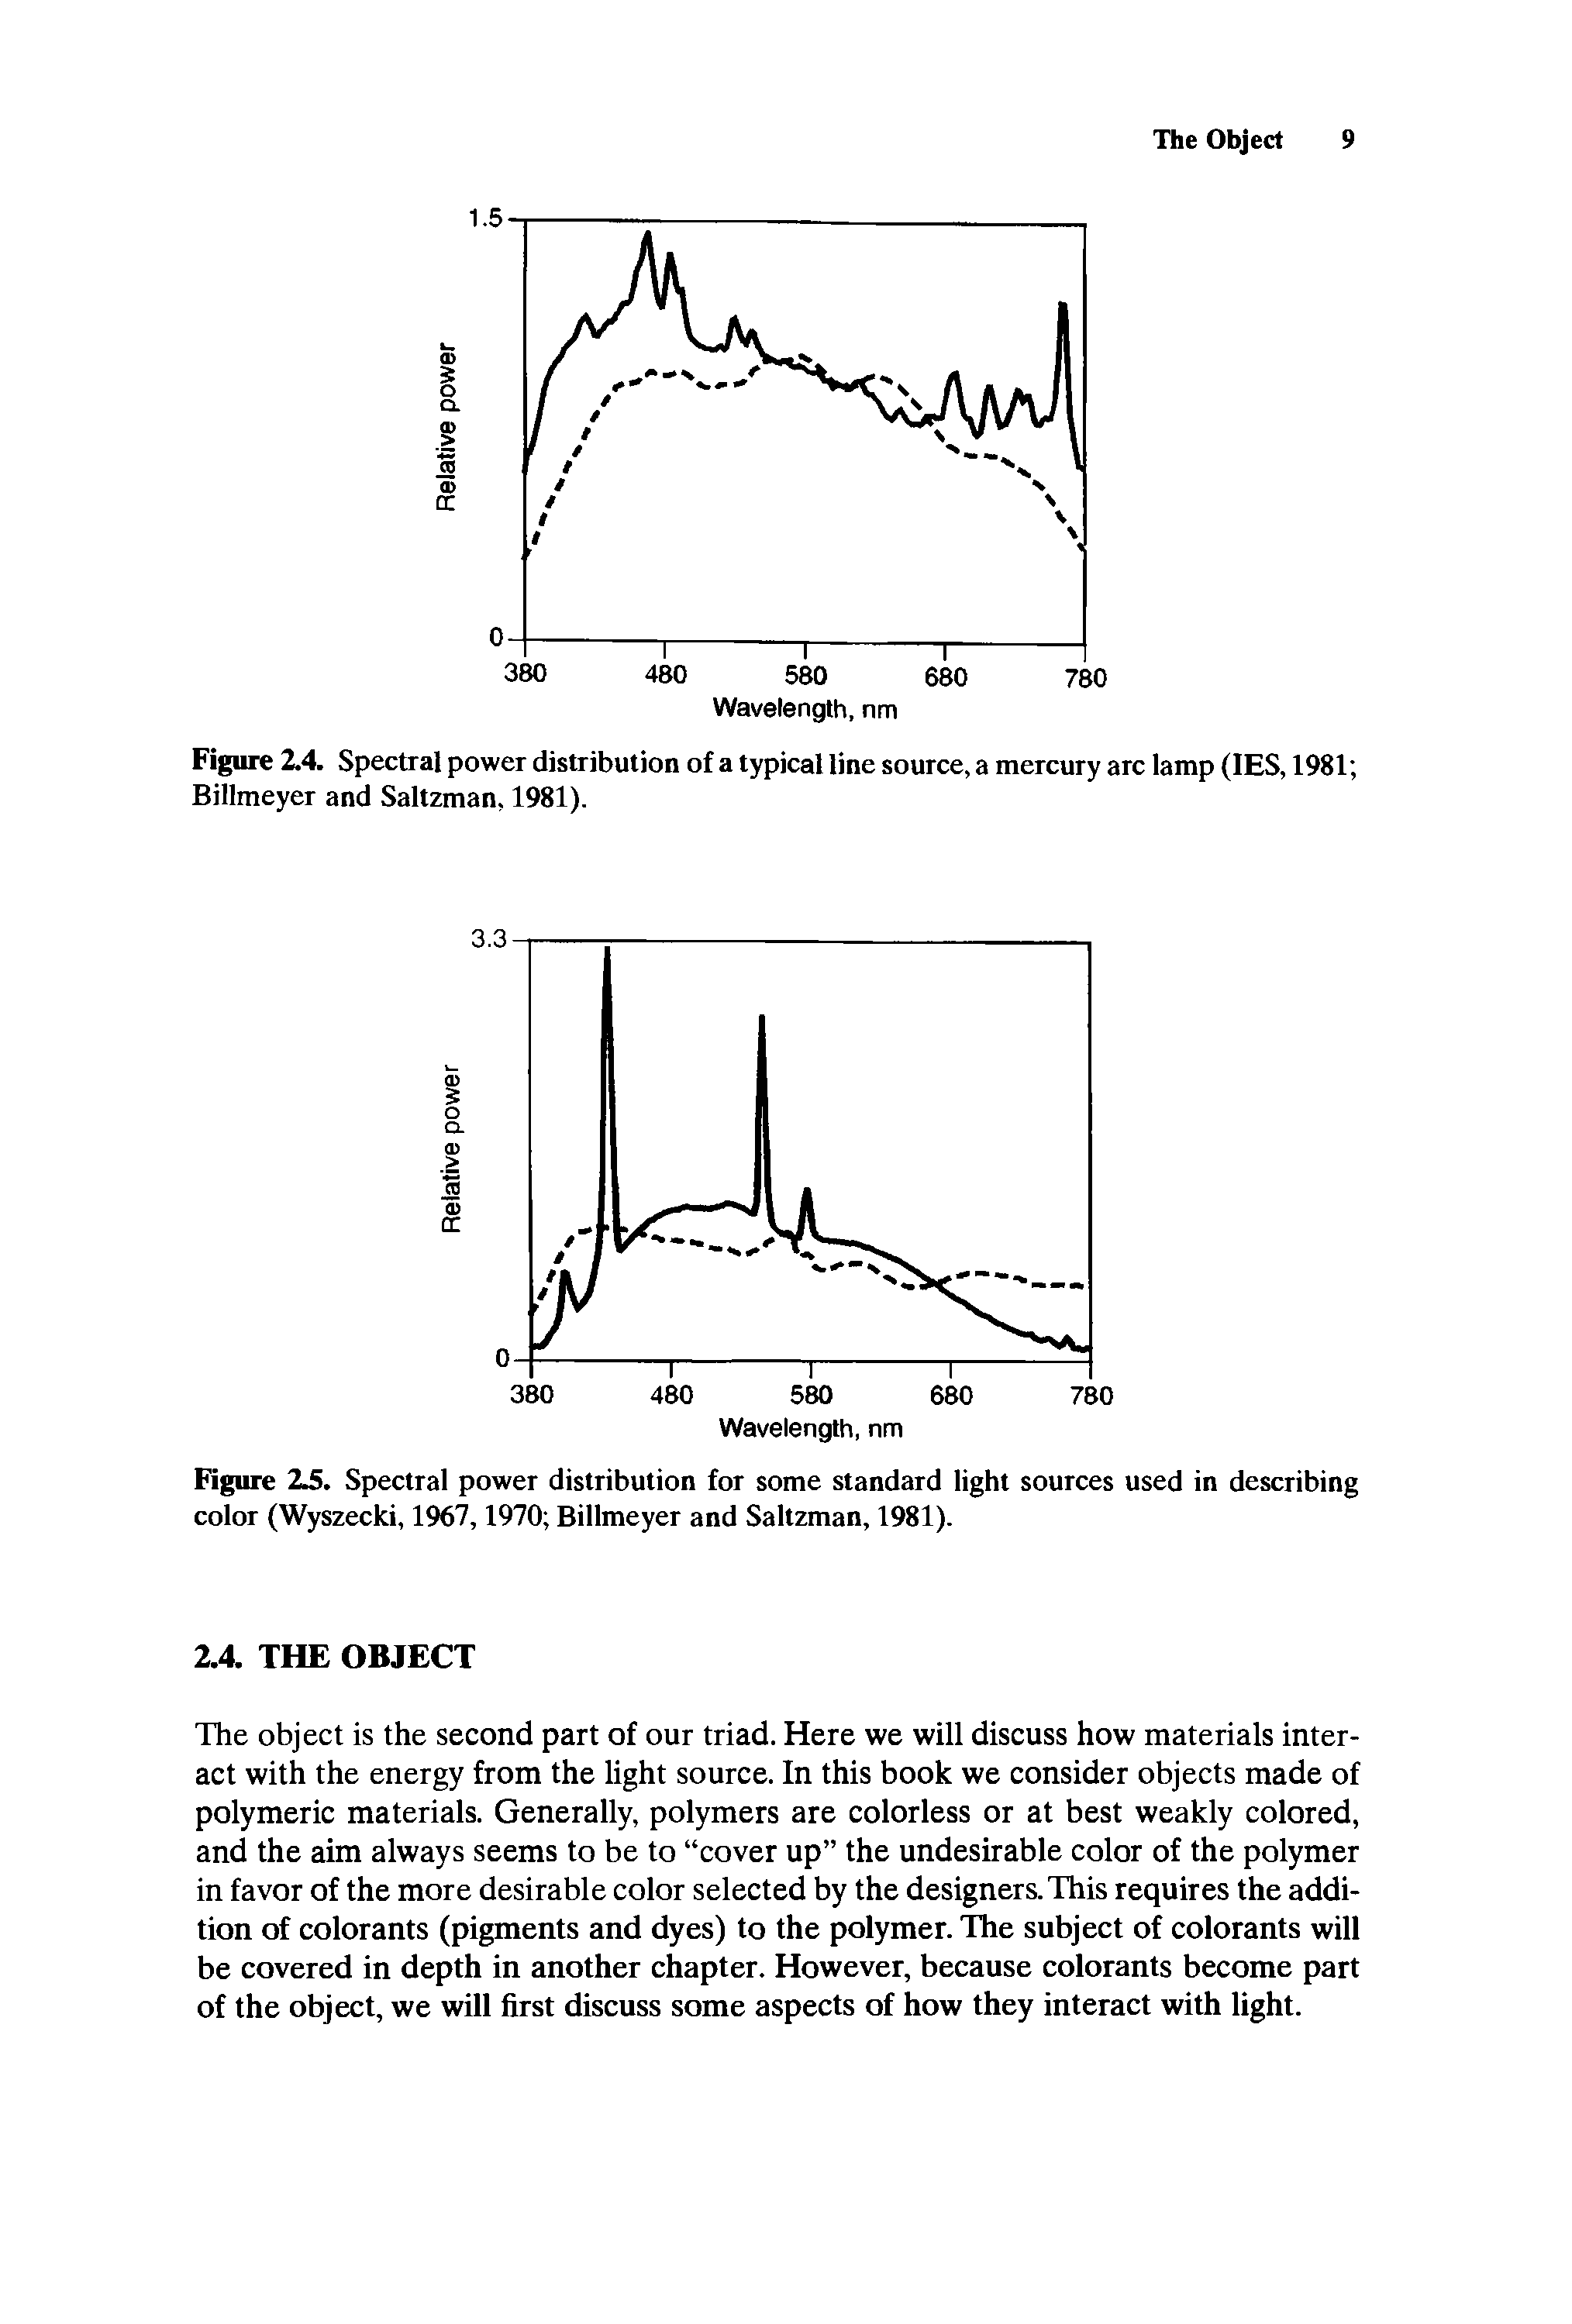 Figure 2. Spectral power distribution for some standard light sources used in describing color (Wyszecki, 1967,1970 Billmeyer and Saltzman, 1981).